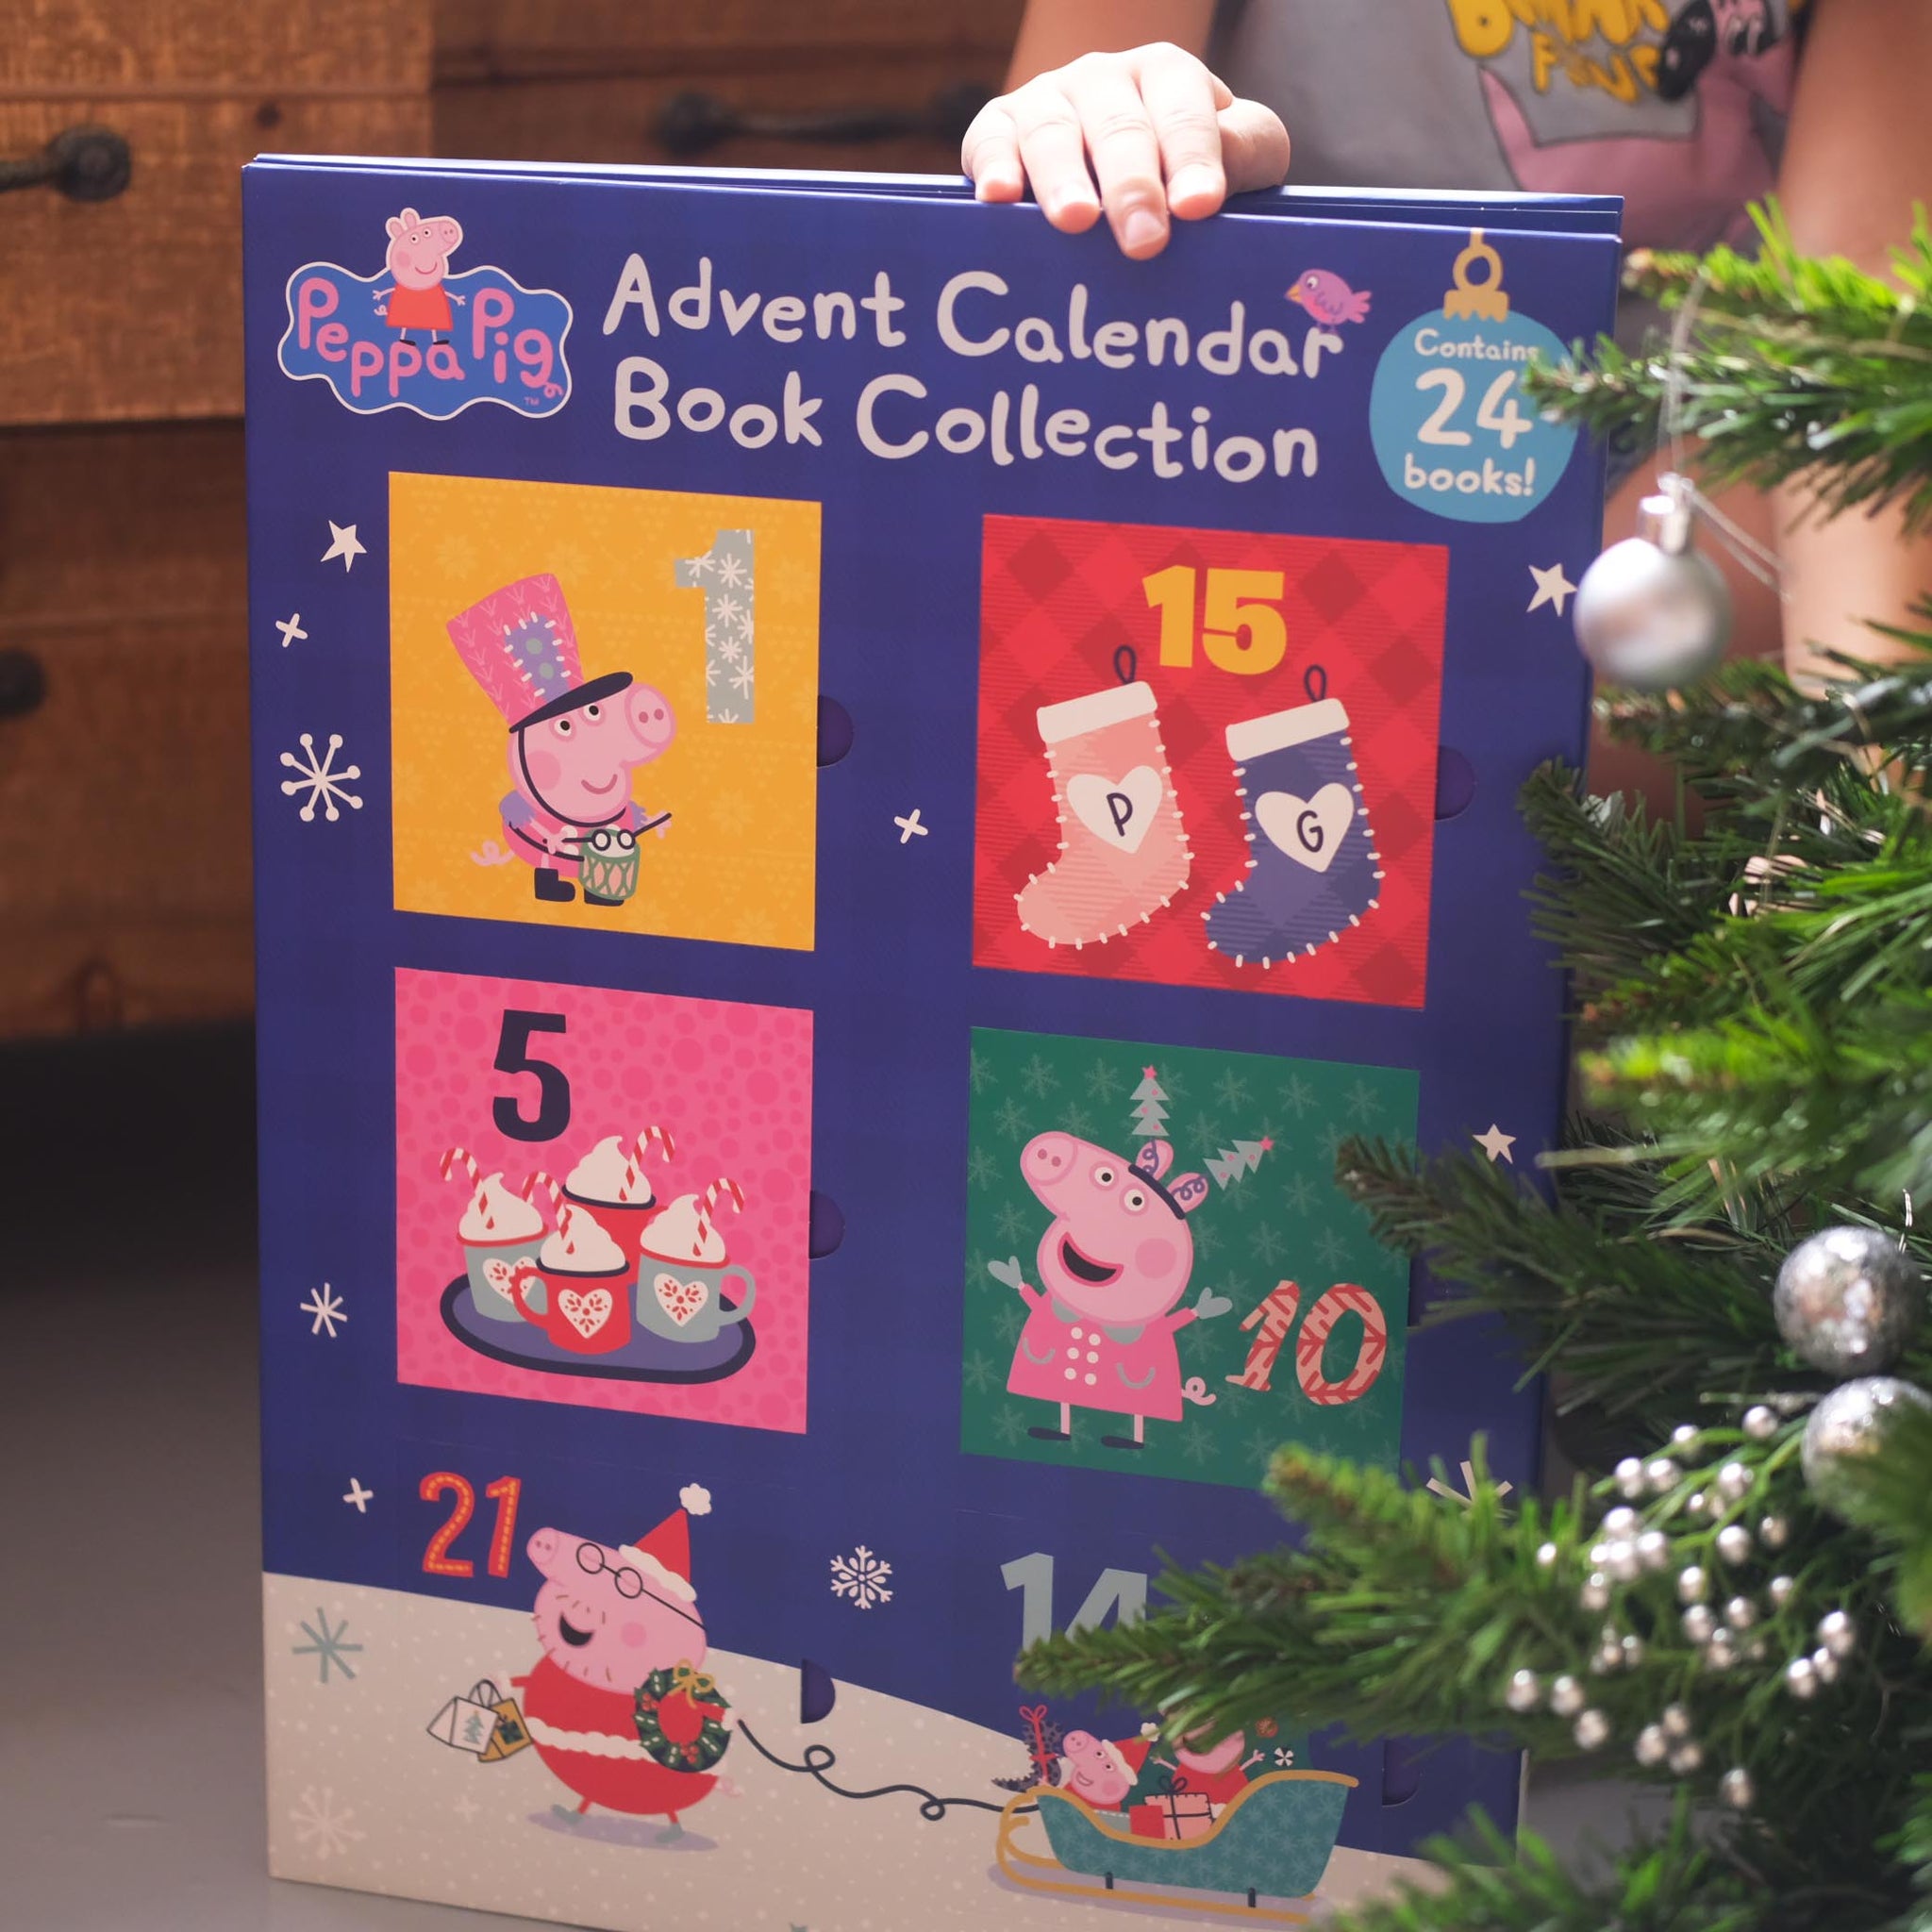 Peppa Pig 2022 Advent Calendar Book Collection set